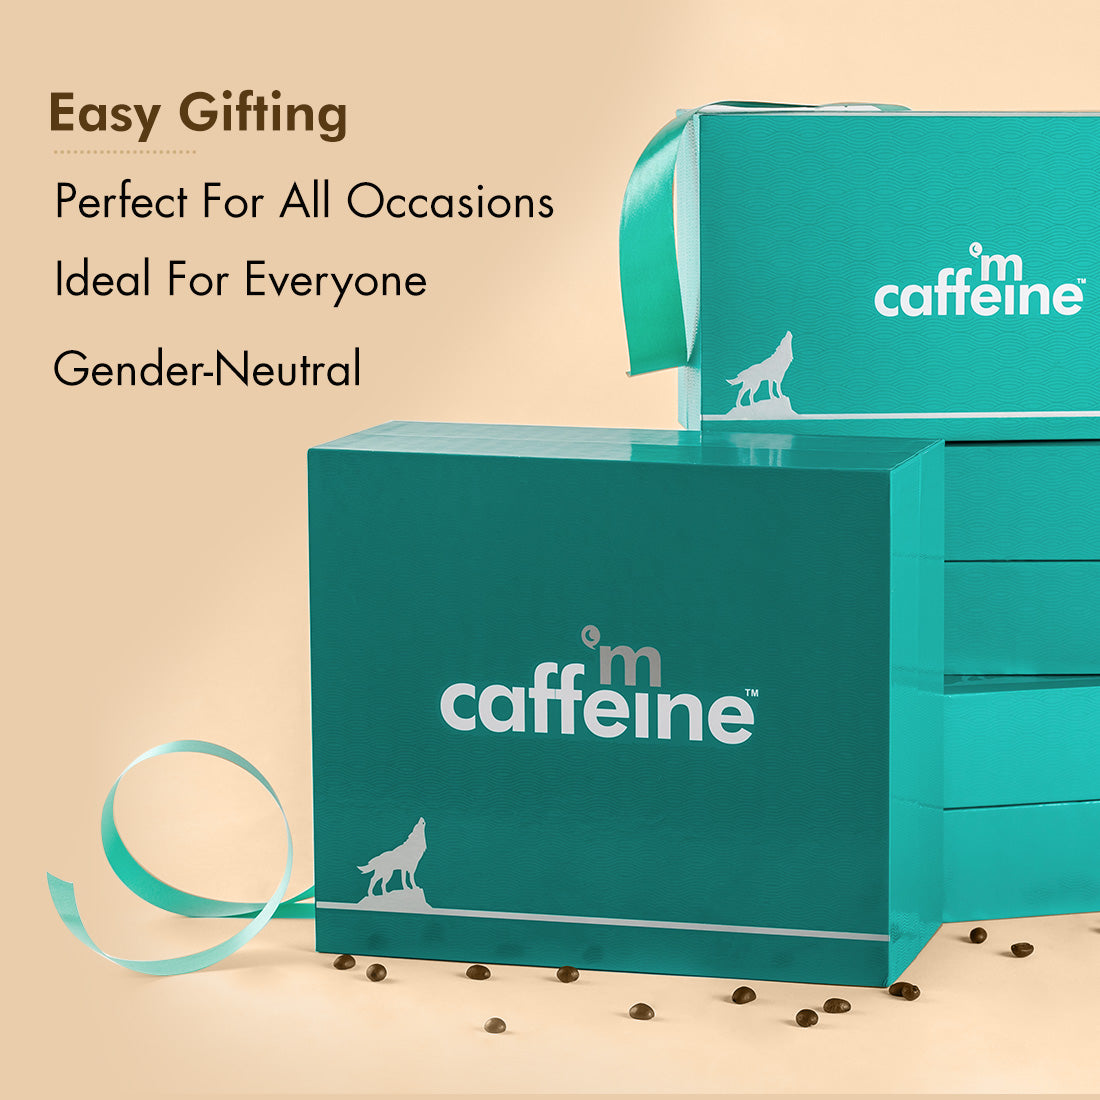 mCaffeine Coffee Shower to Shine Body Gift Kit